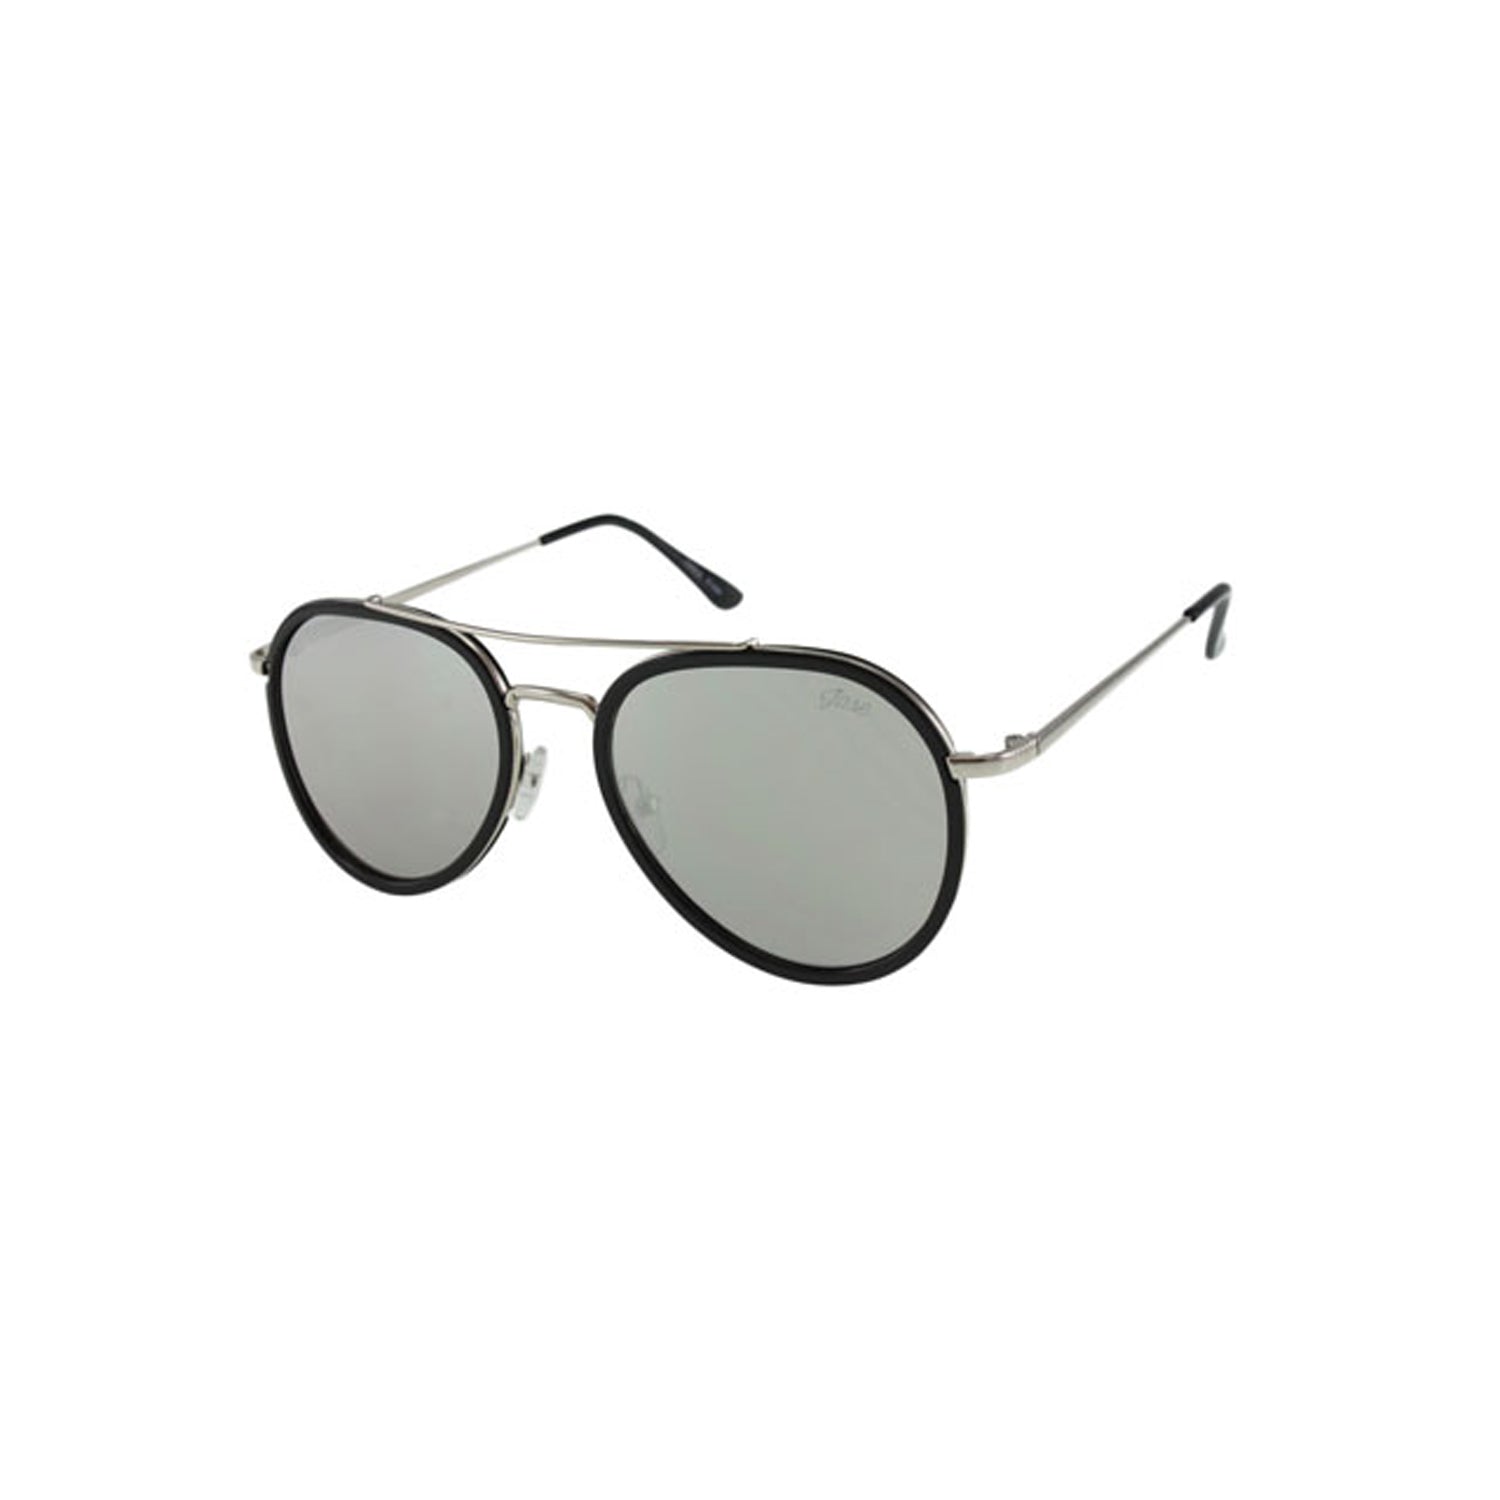 Jase New York Stark Sunglasses in Silver